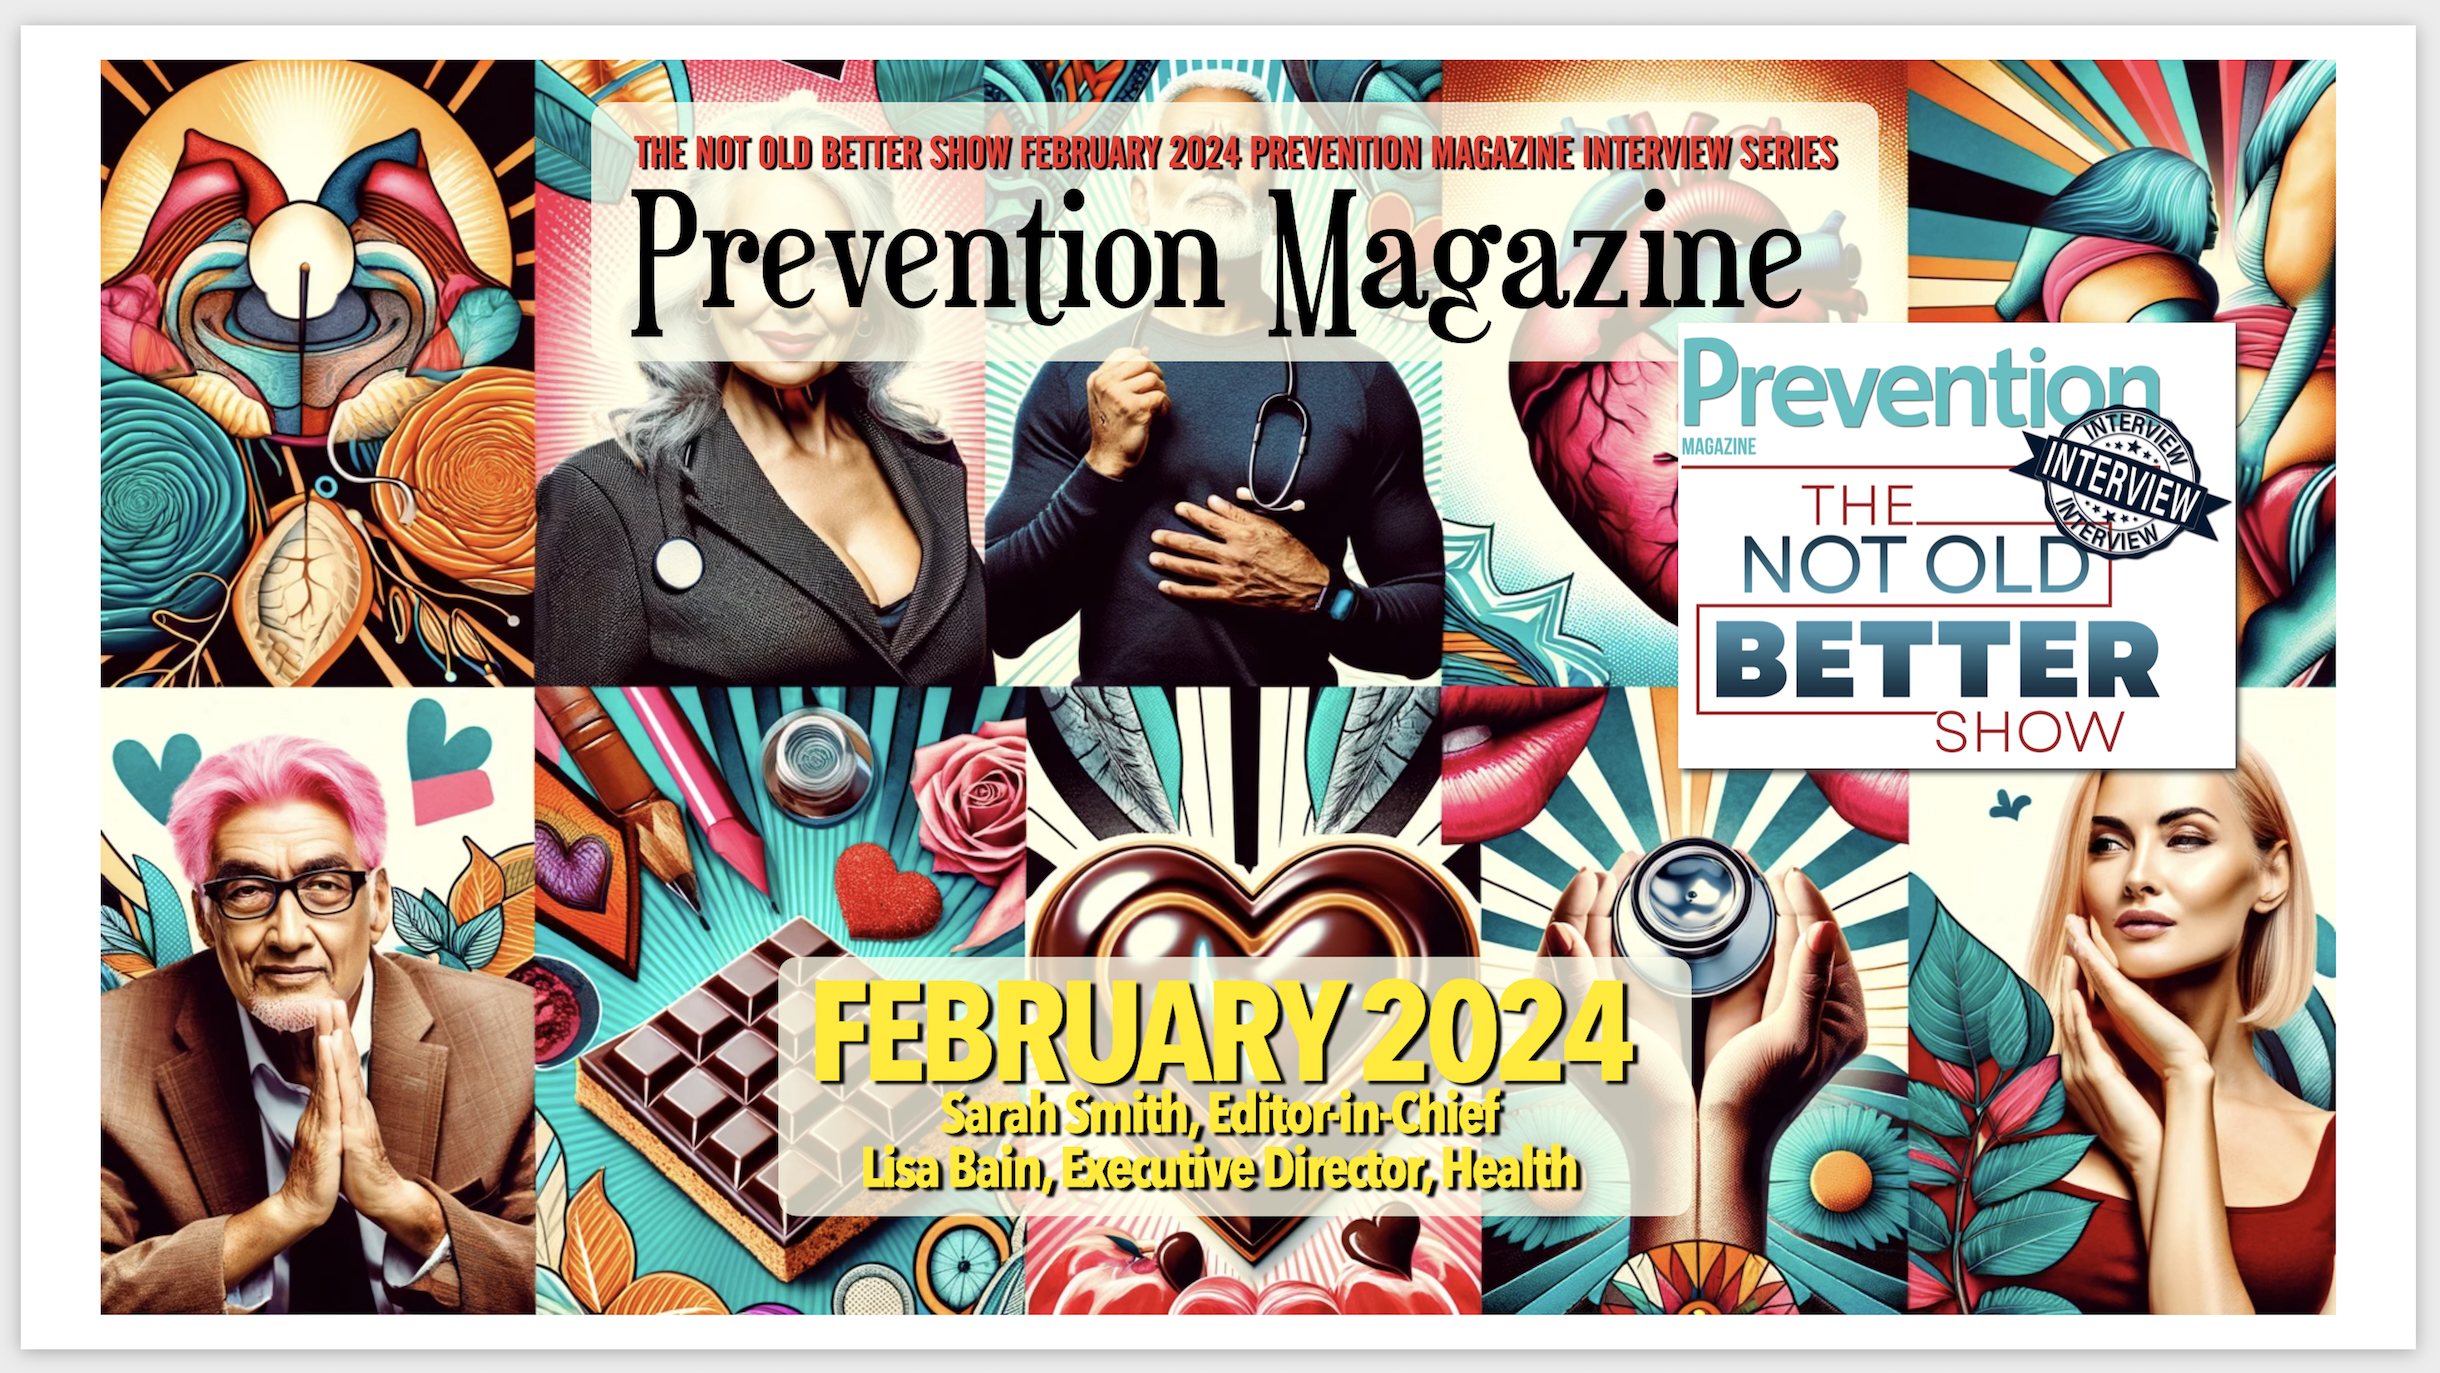 FEBRUARY 2024 PREVENTION MAGAZINE: Golden Wisdom: Health & Wellness Insights for the Ageless Spirit